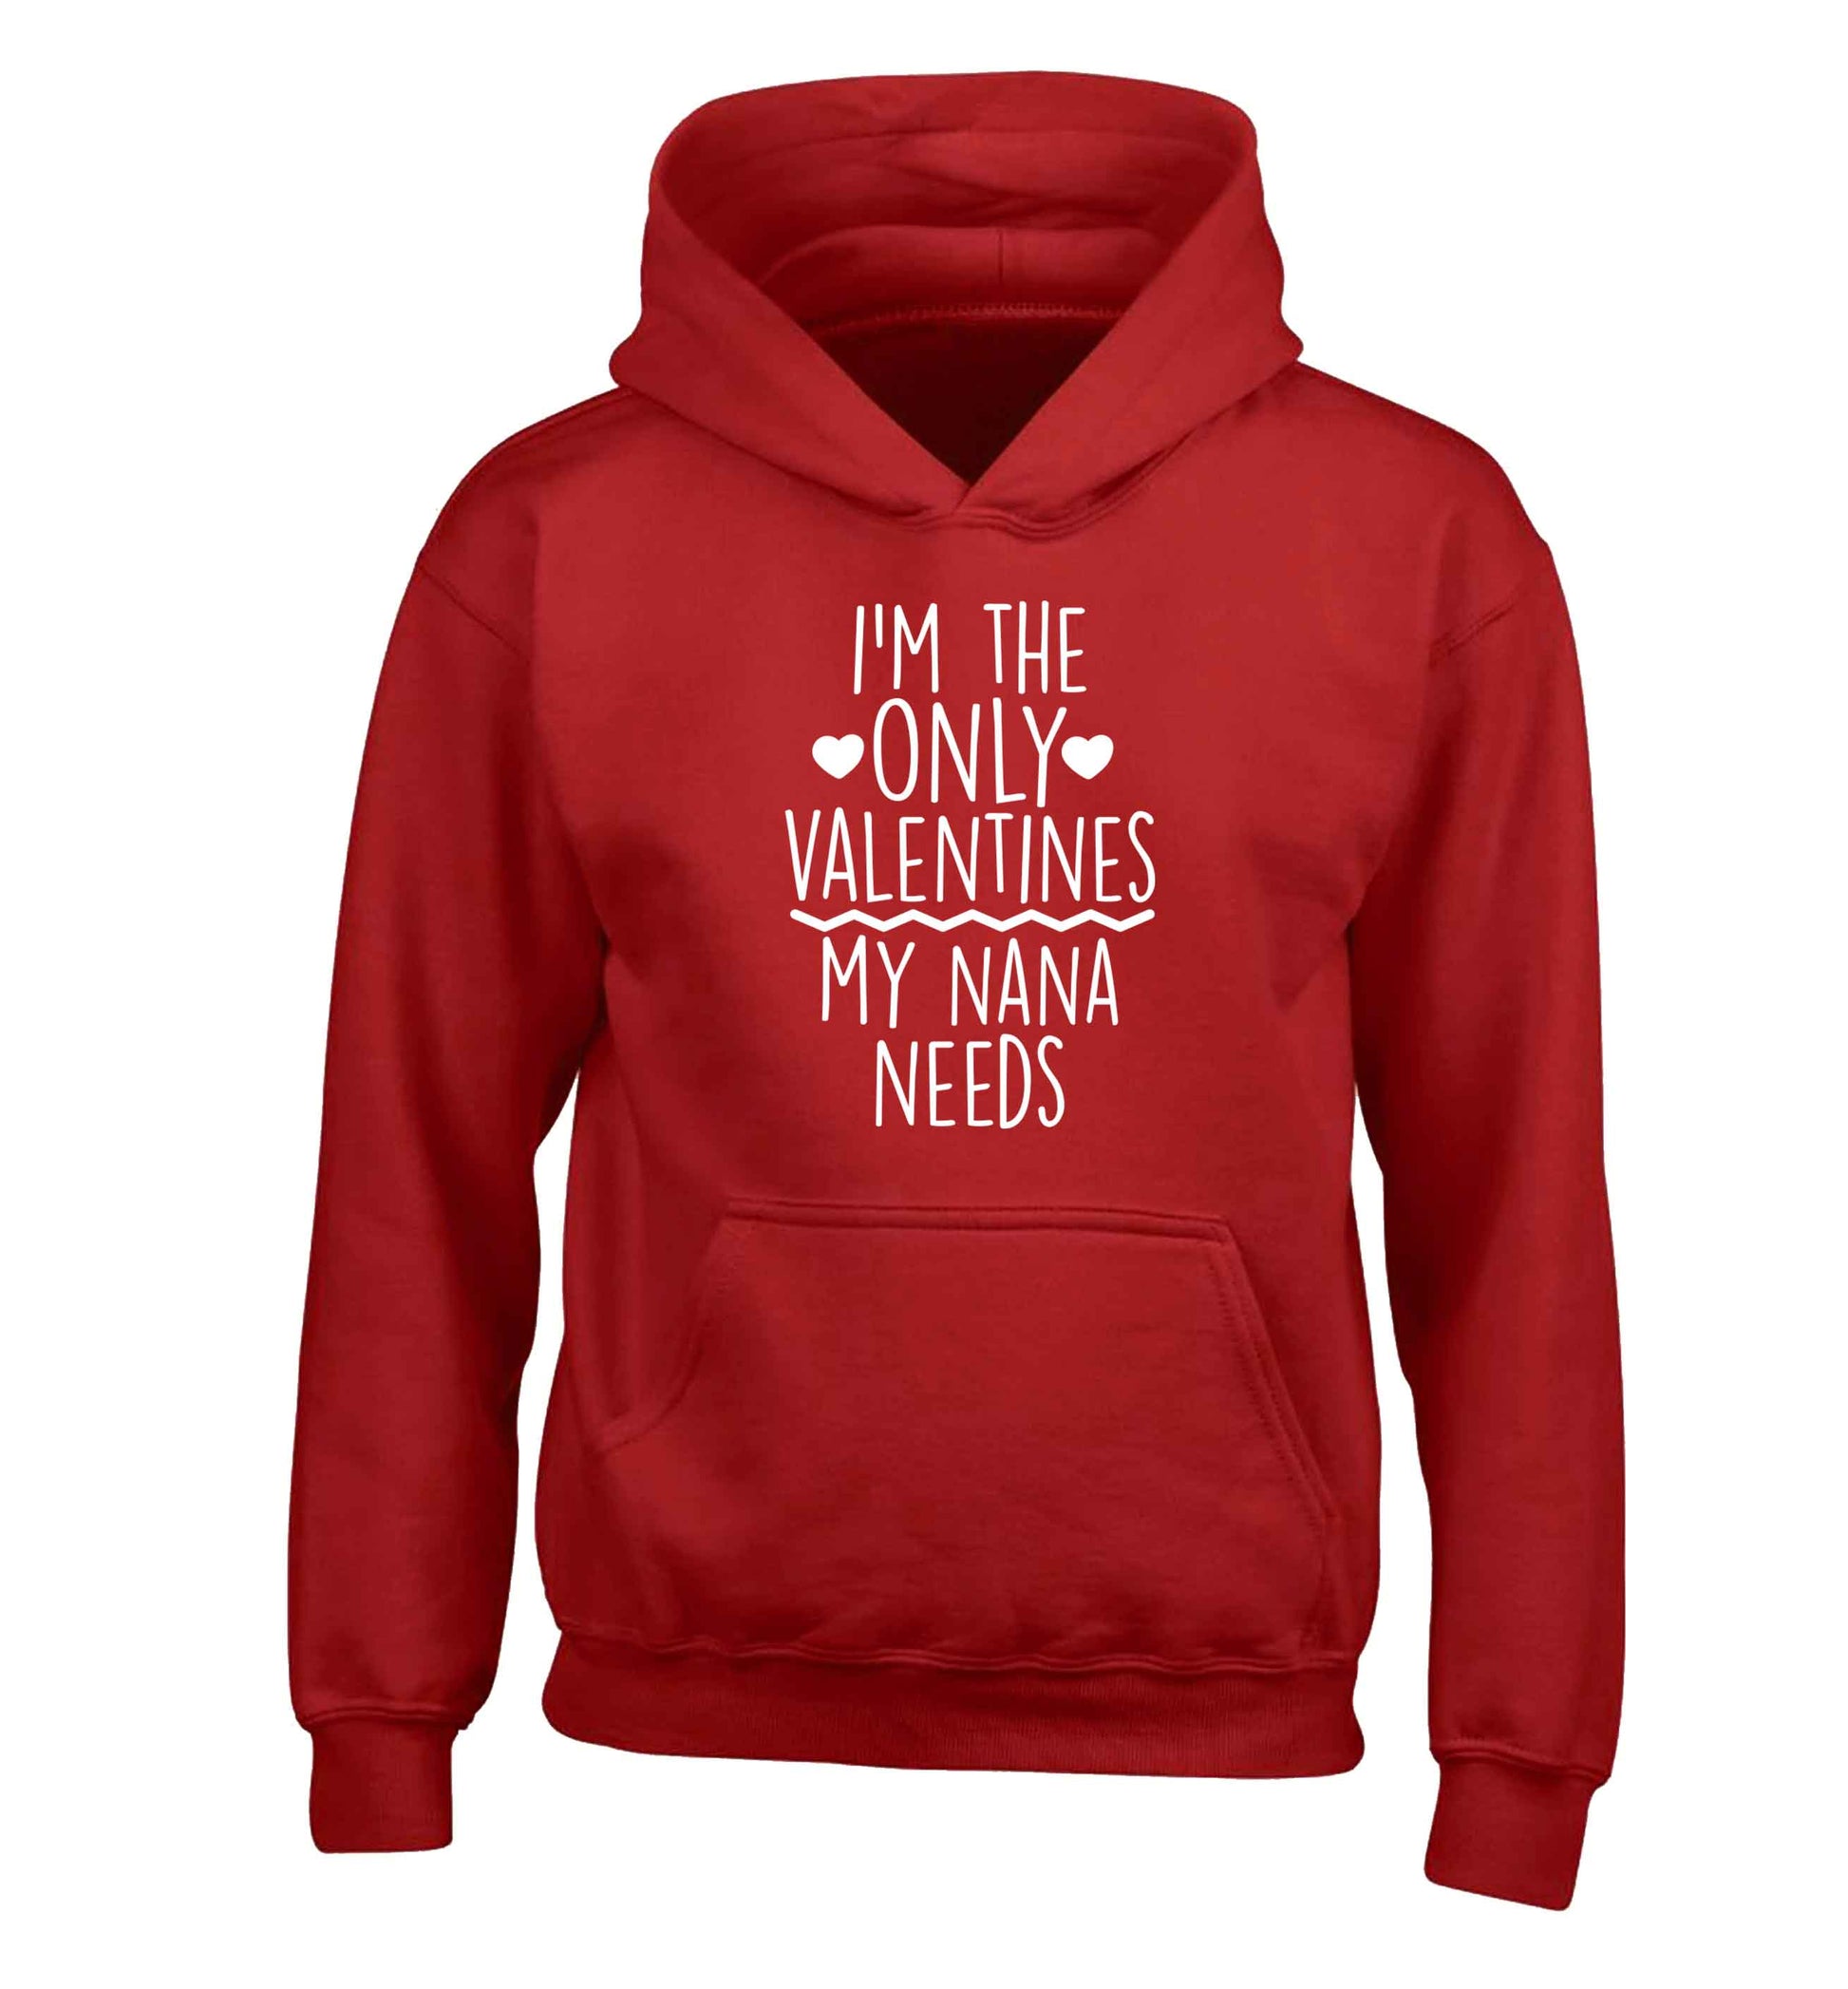 I'm the only valentines my nana needs children's red hoodie 12-13 Years